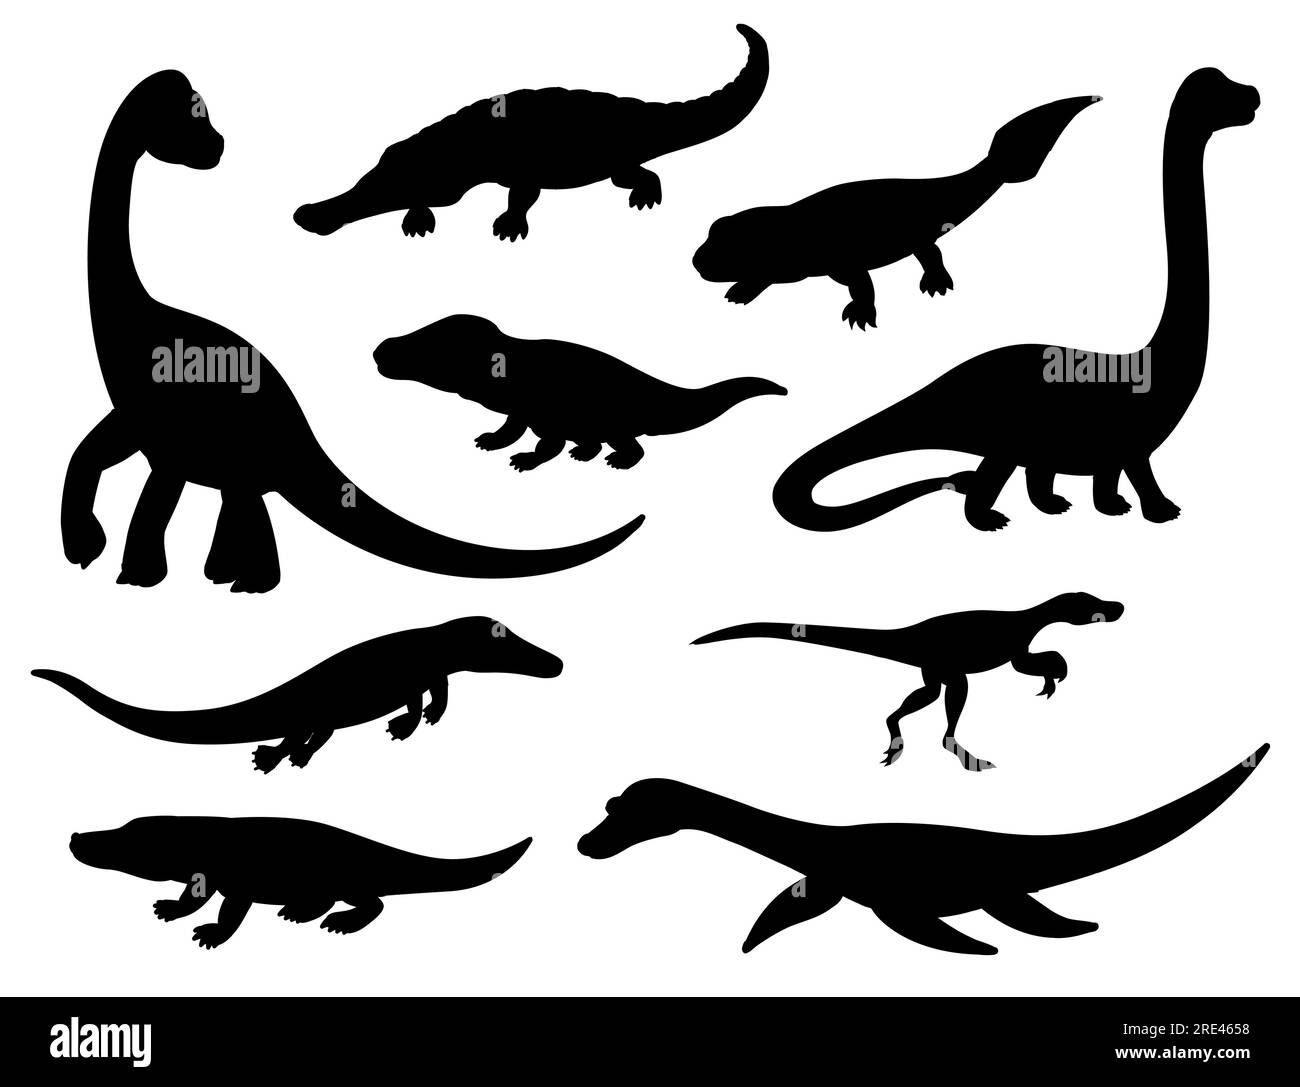 Dinosaur black silhouettes of jurassic extinct animals. Vector prehistoric dino reptiles and crocodile monsters of mesosaurus, eoraptor, ichthyostega and brachiosaurus, erythrosuchus and sarcosuchus Stock Vector